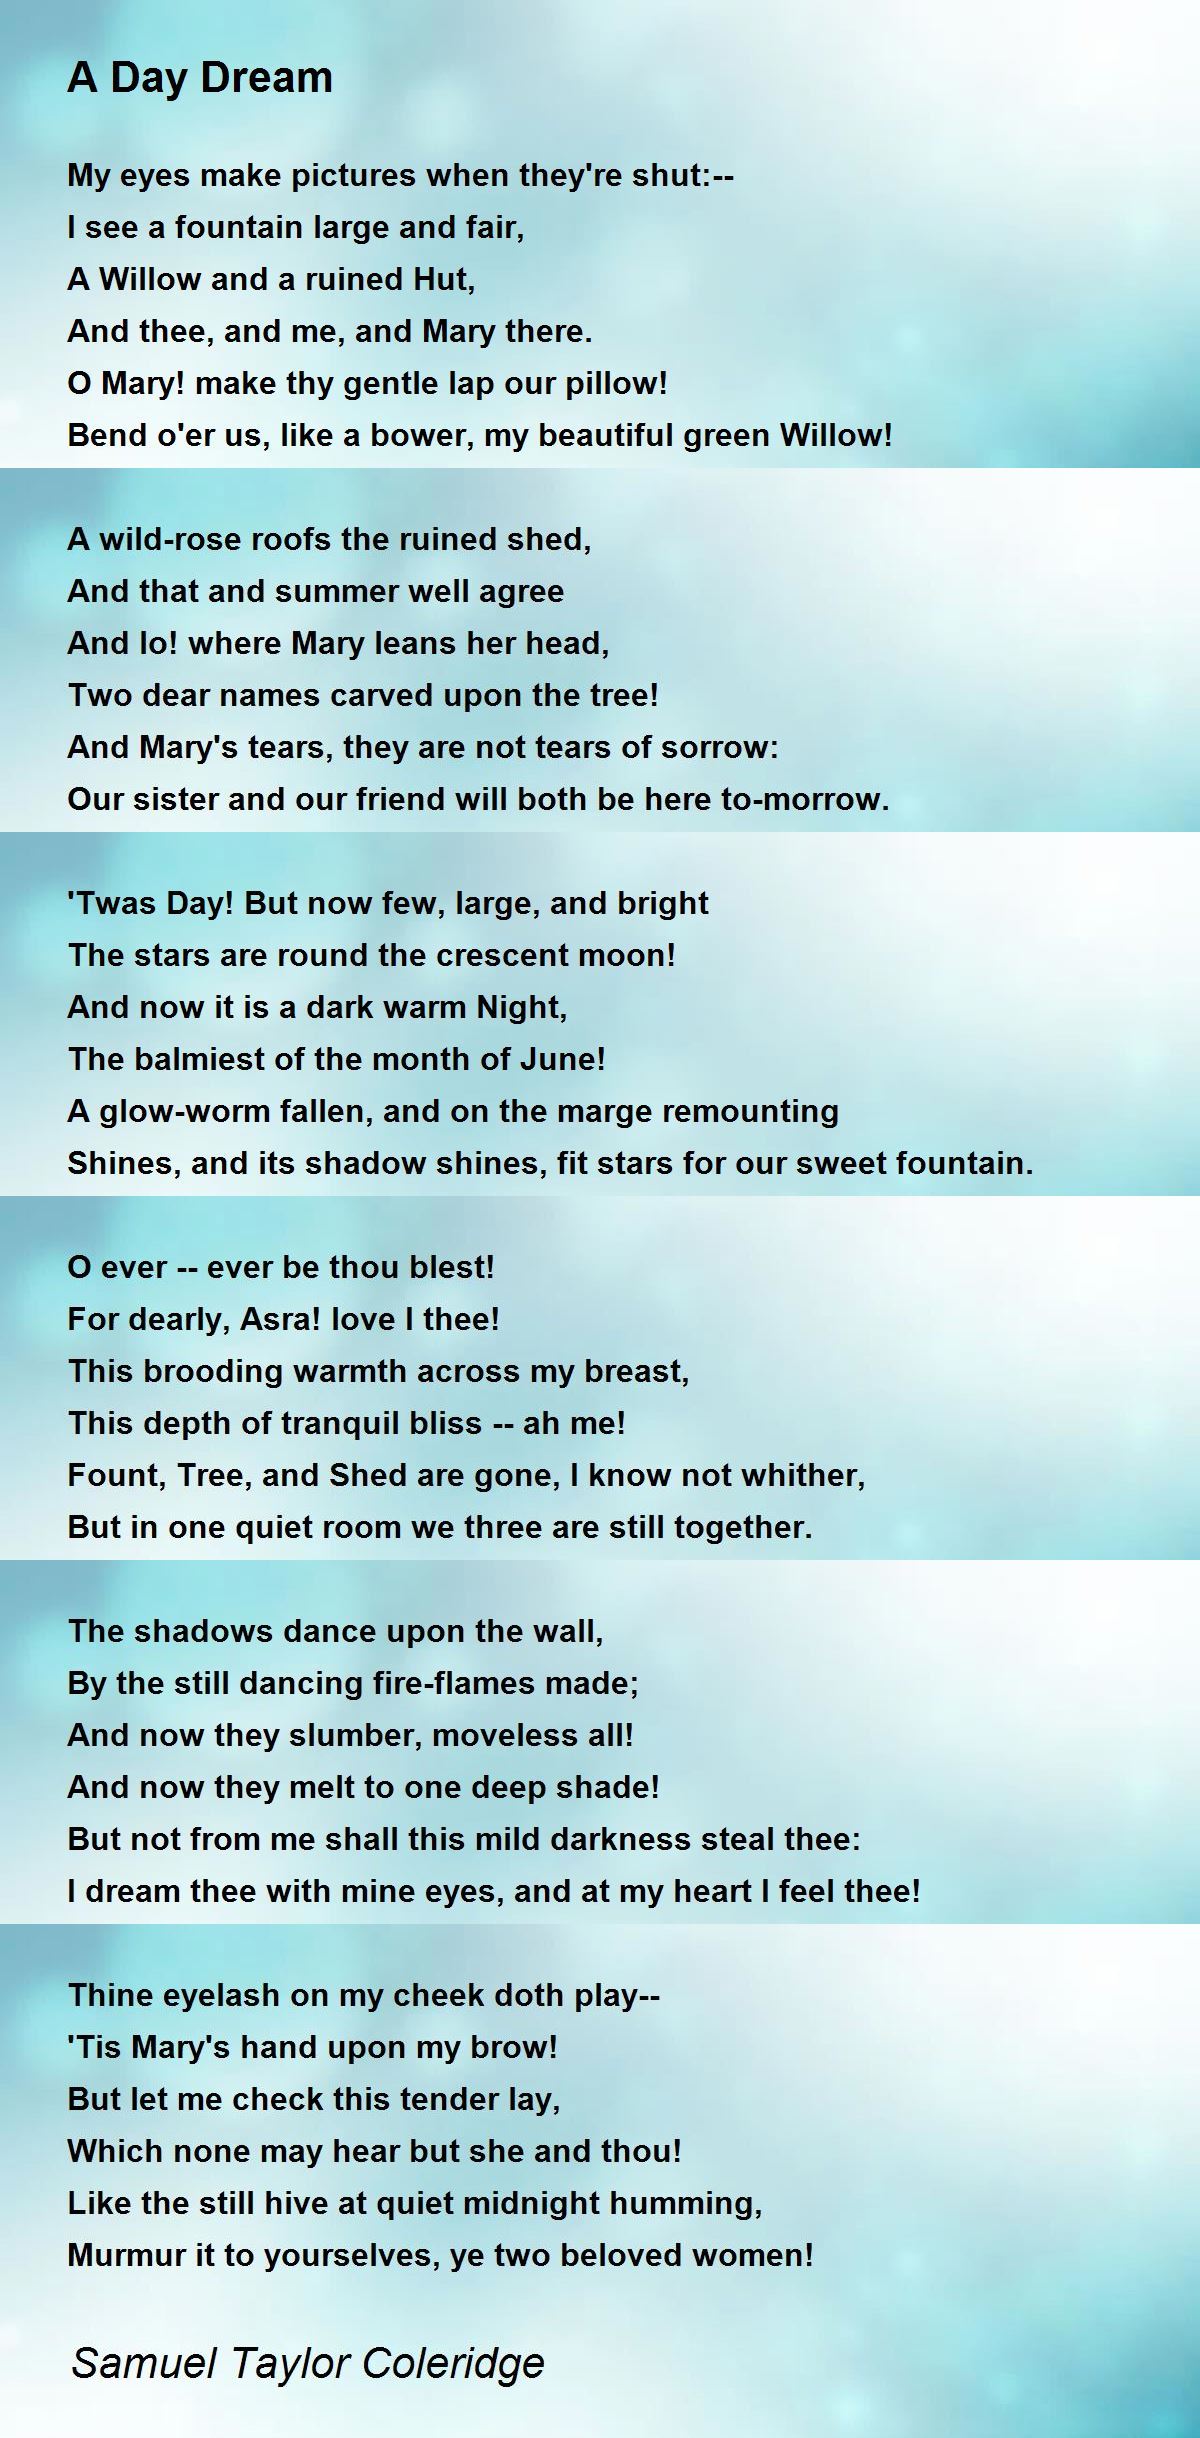 A Day Dream Poem by Samuel Taylor Coleridge - Poem Hunter